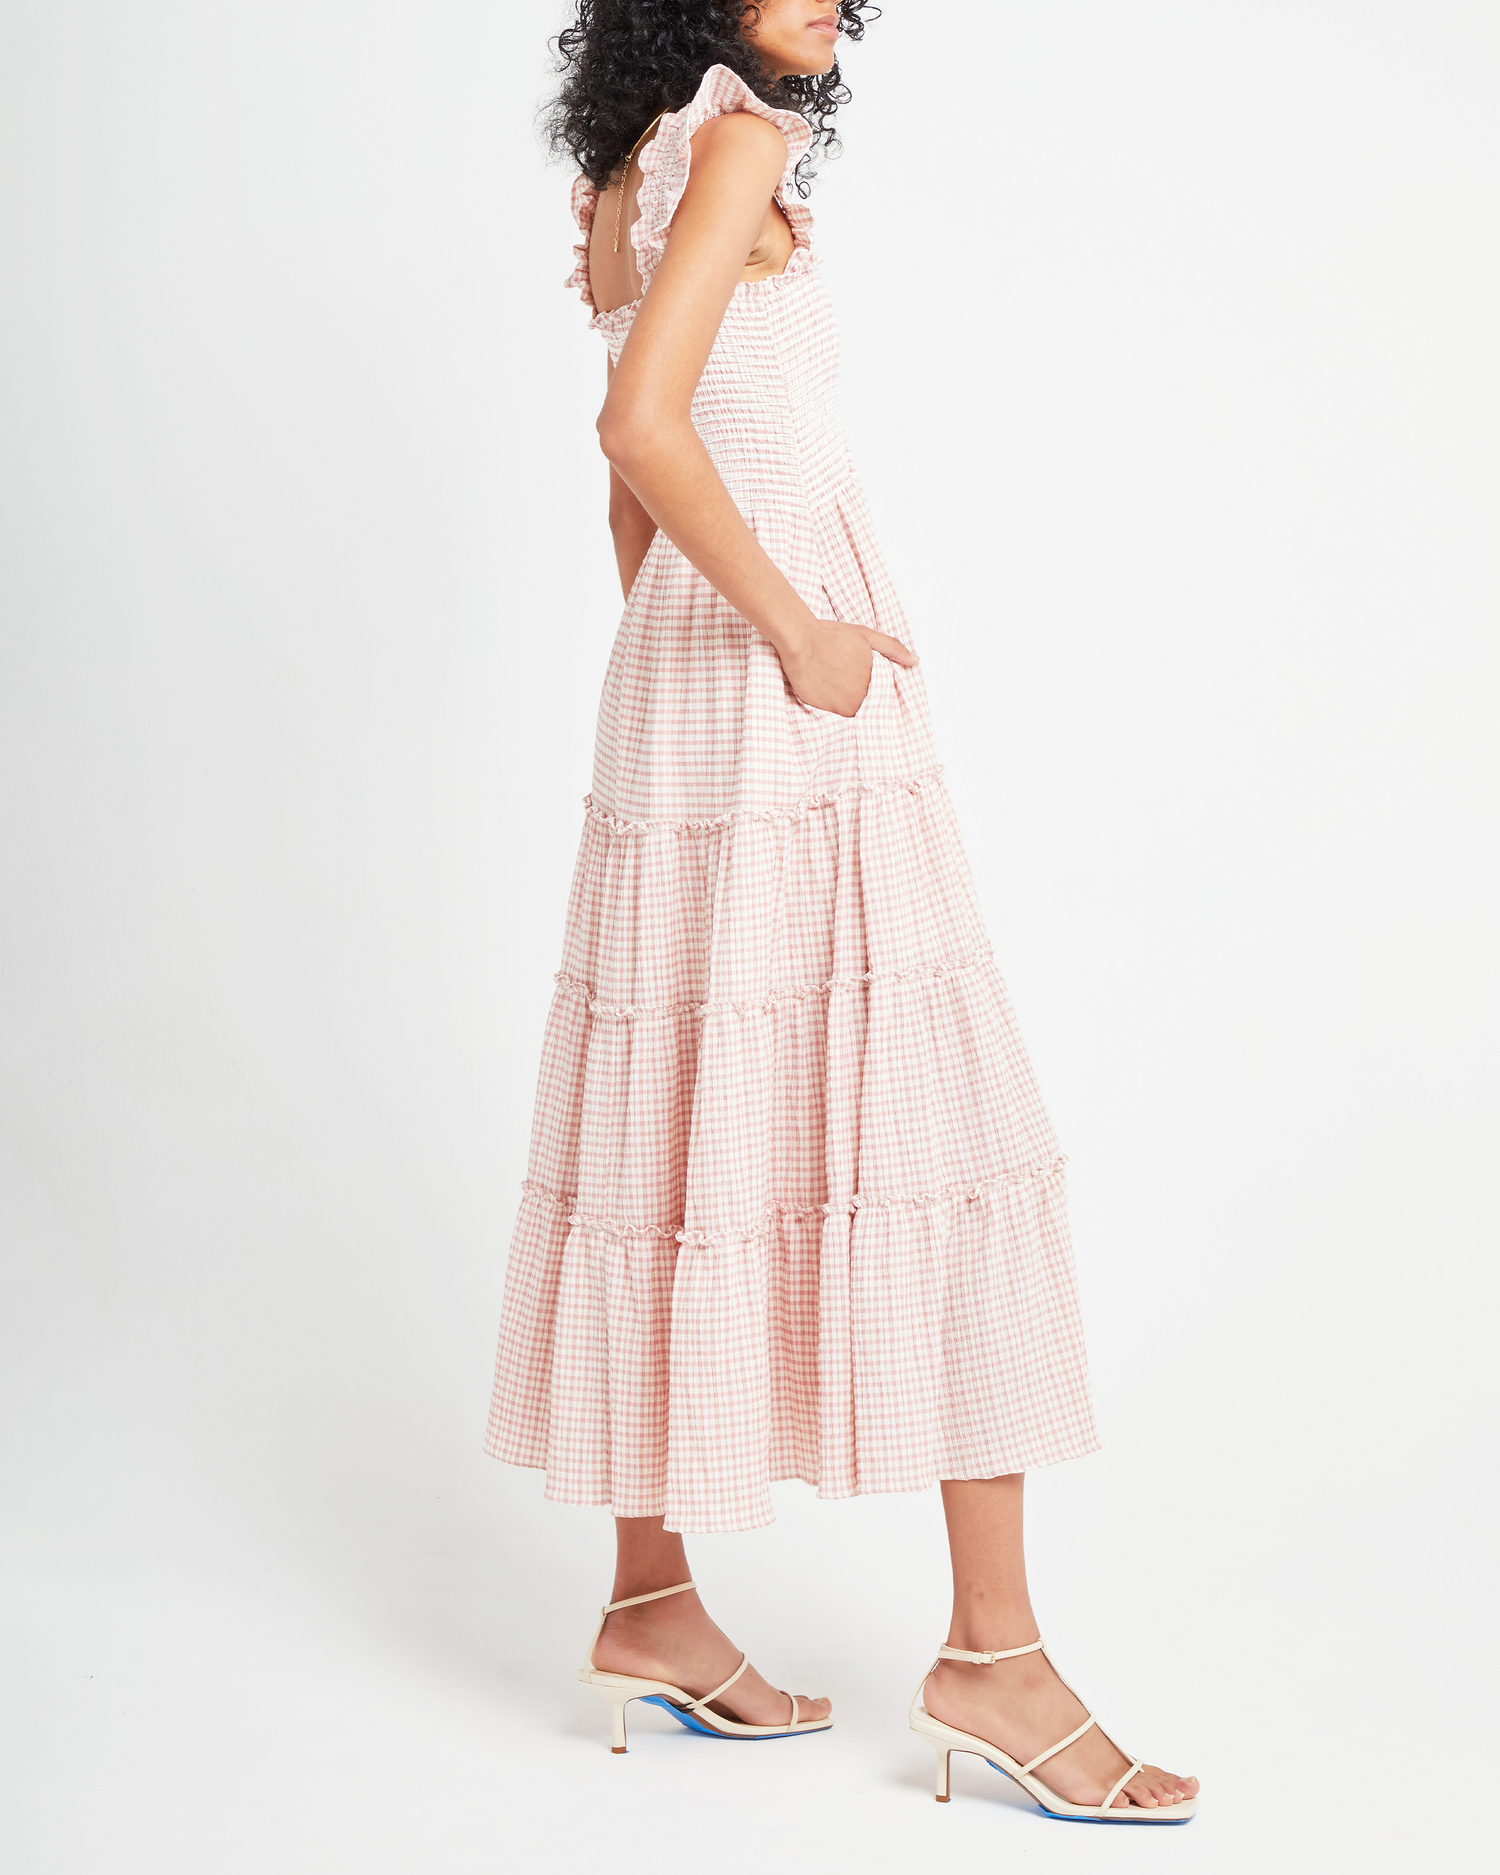 Third image of Calypso Maxi Dress, a pink maxi dress, ruffle cap sleeves, smocked bodice